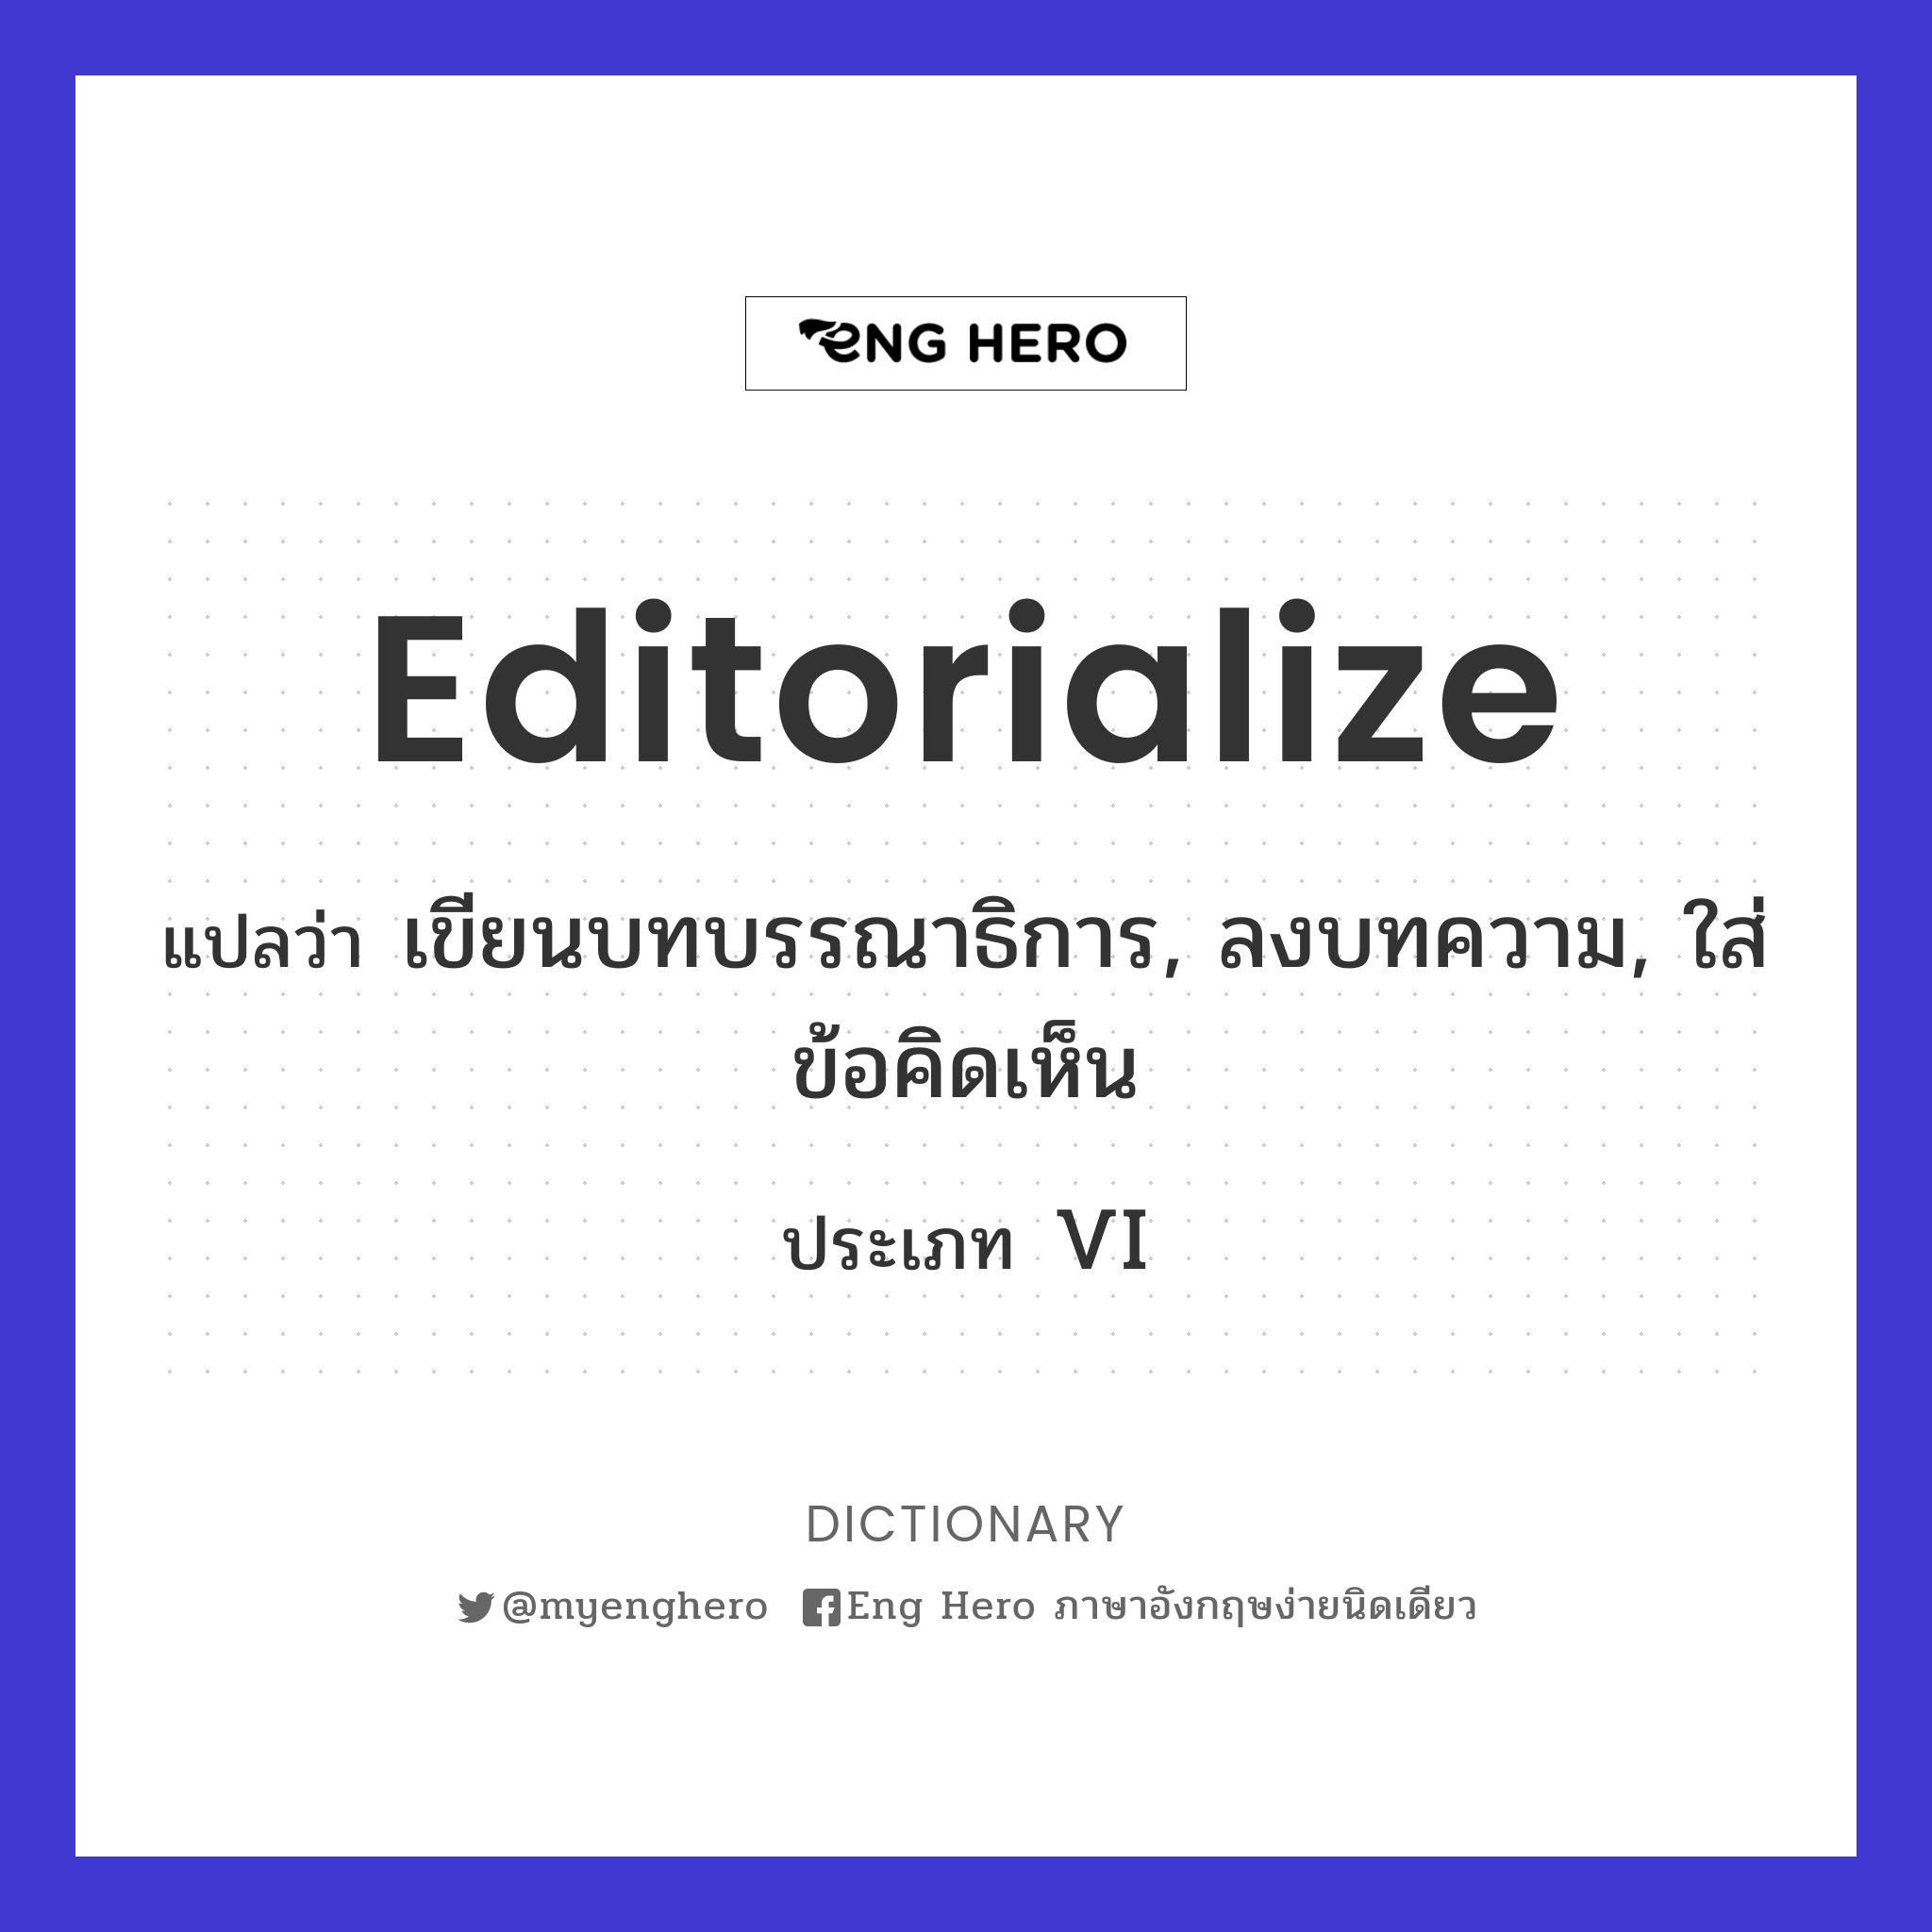 editorialize